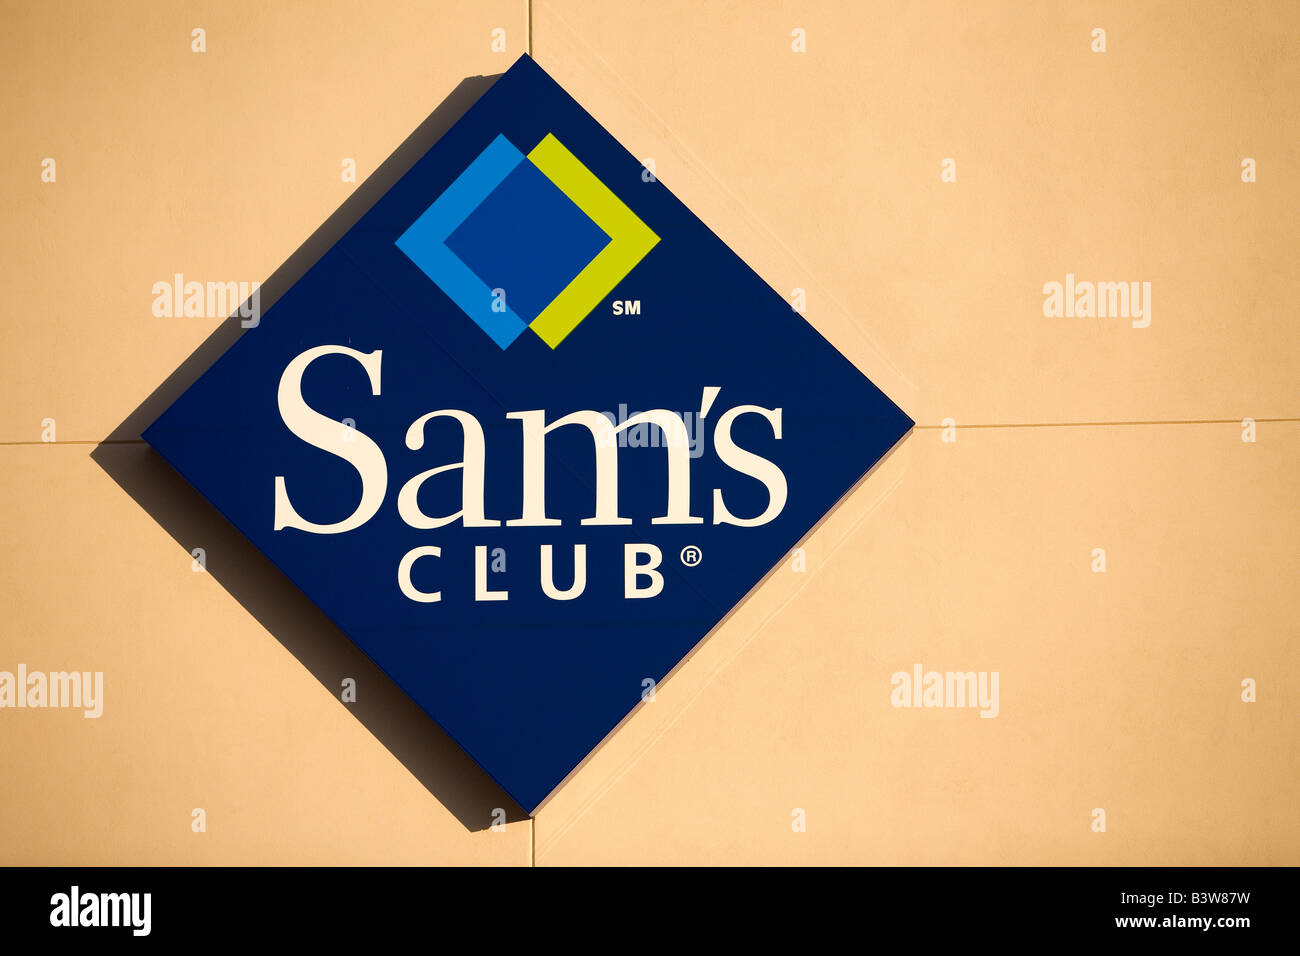 The logo of a Sam's Club in Bentonville, Arkansas, U.S.A. Stock Photo